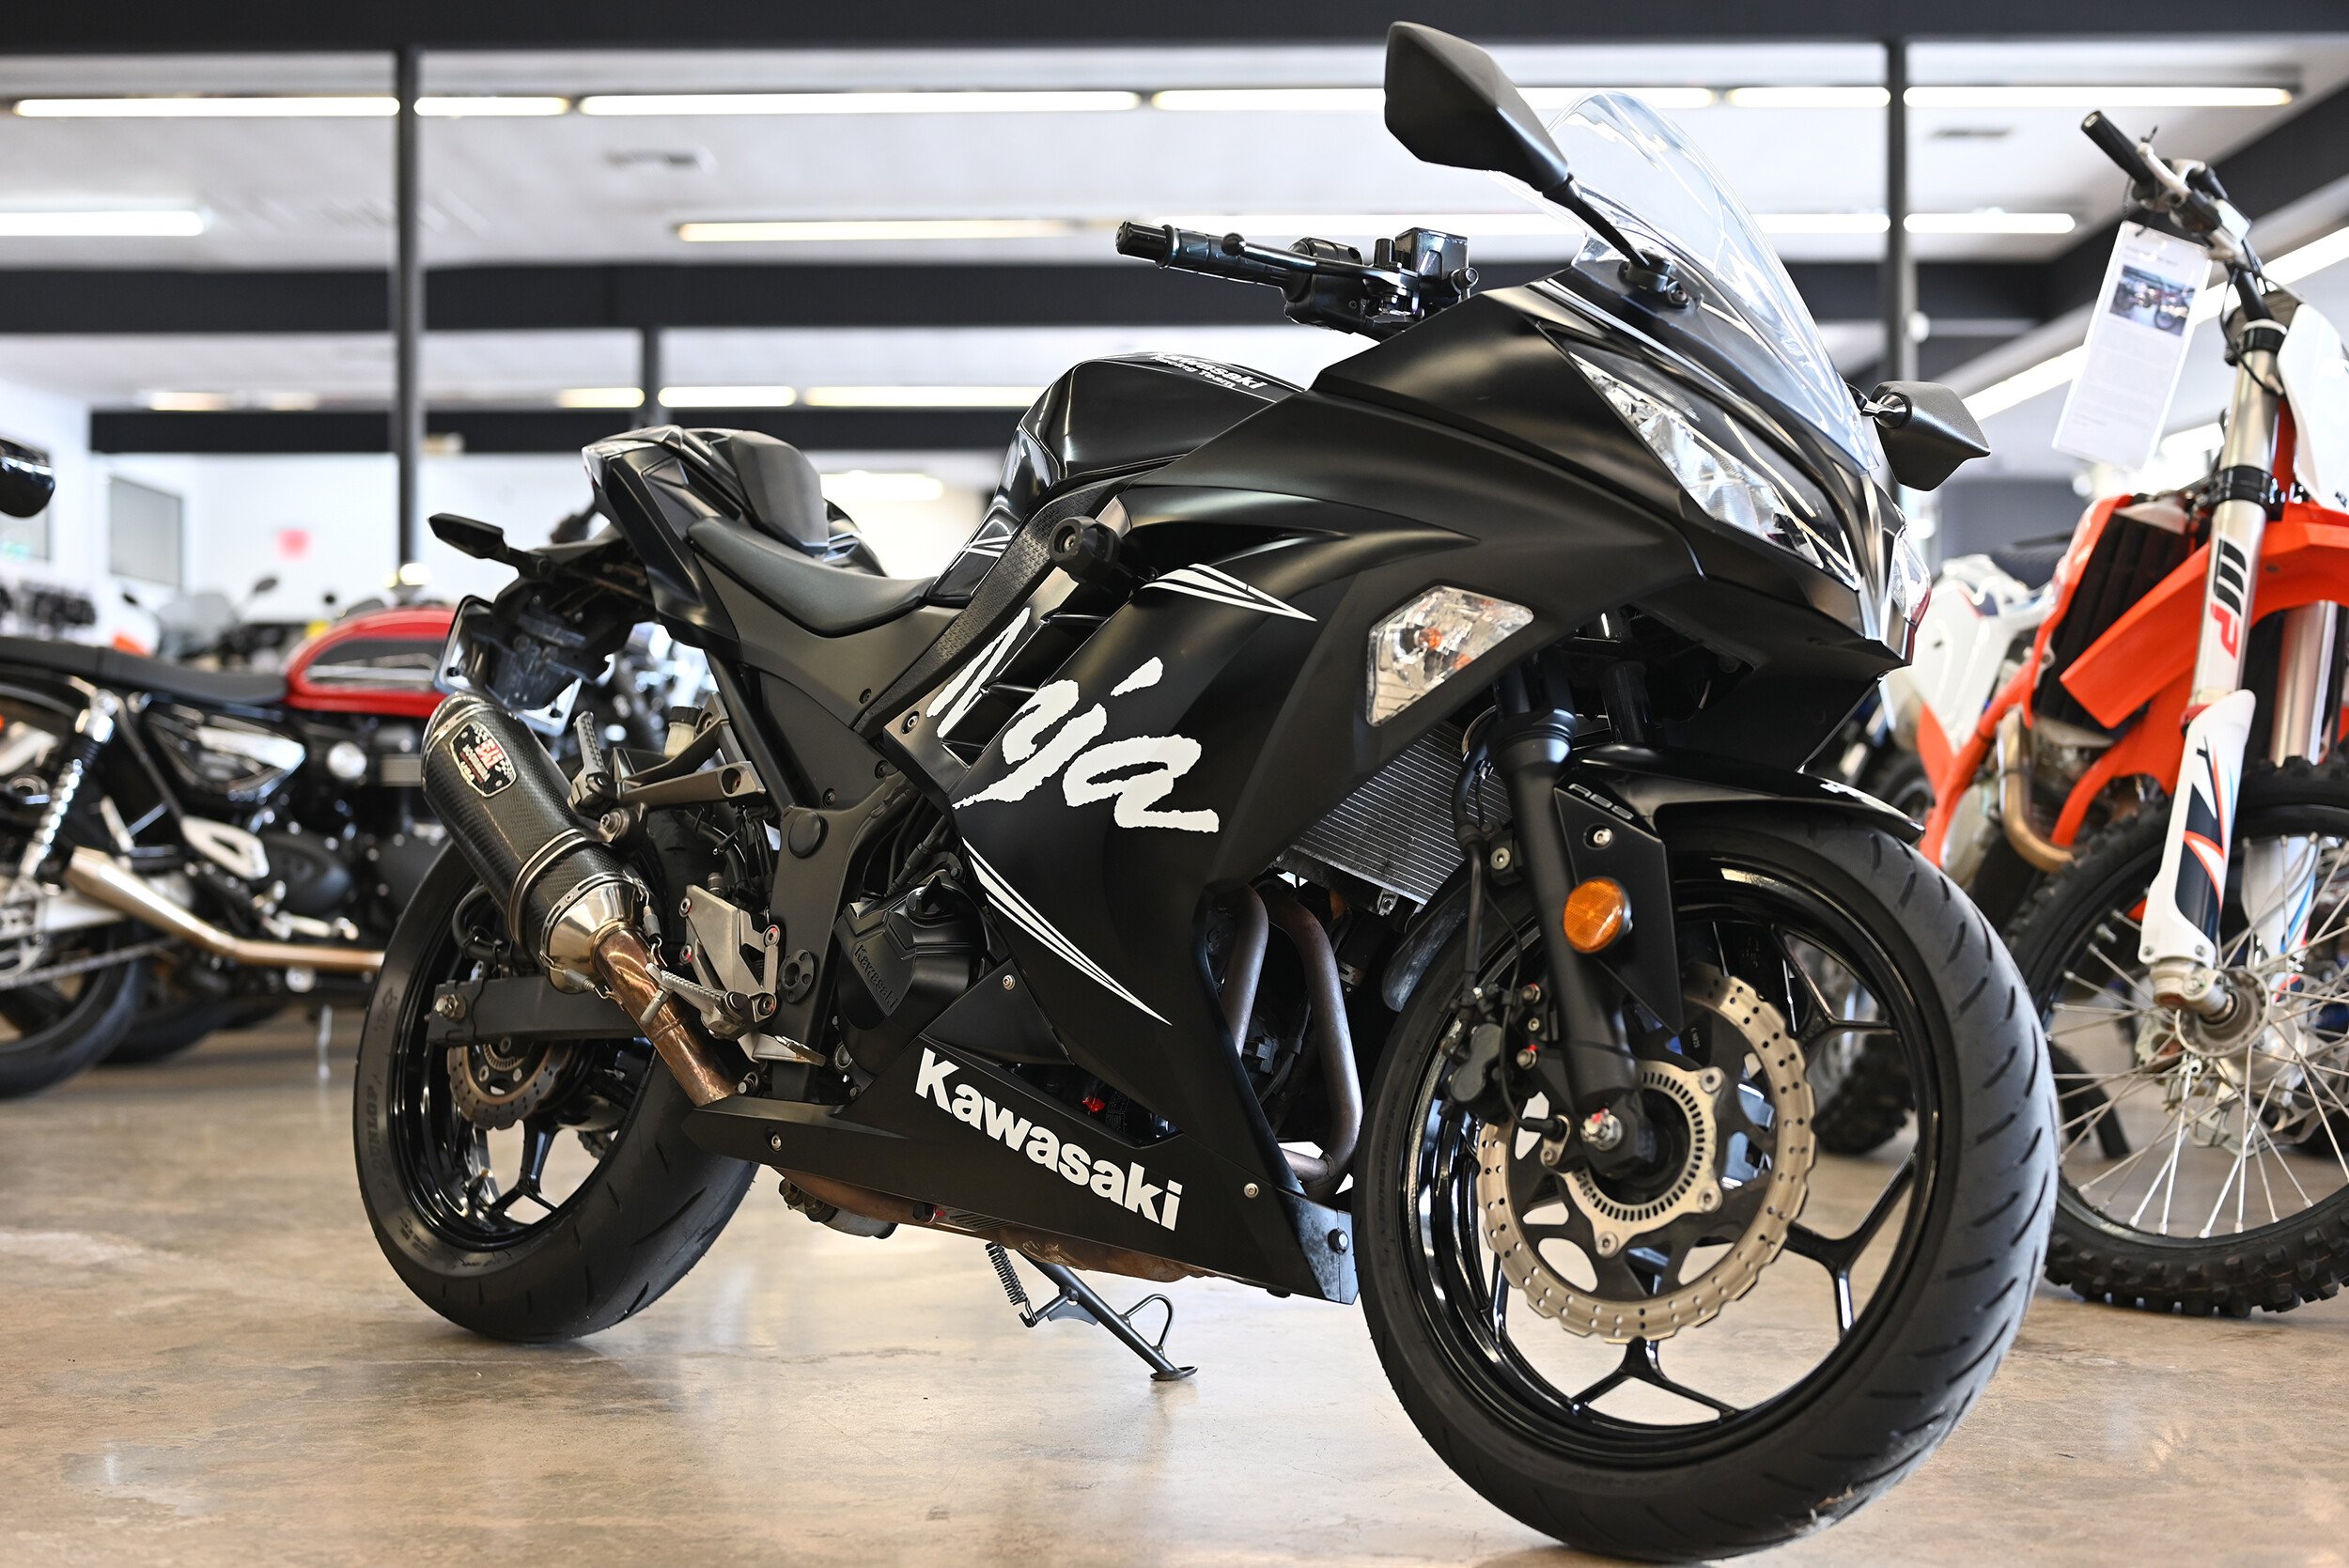 Alianza Brillar garra Kawasaki Ninja 300 Motorcycles for Sale - Motorcycles on Autotrader